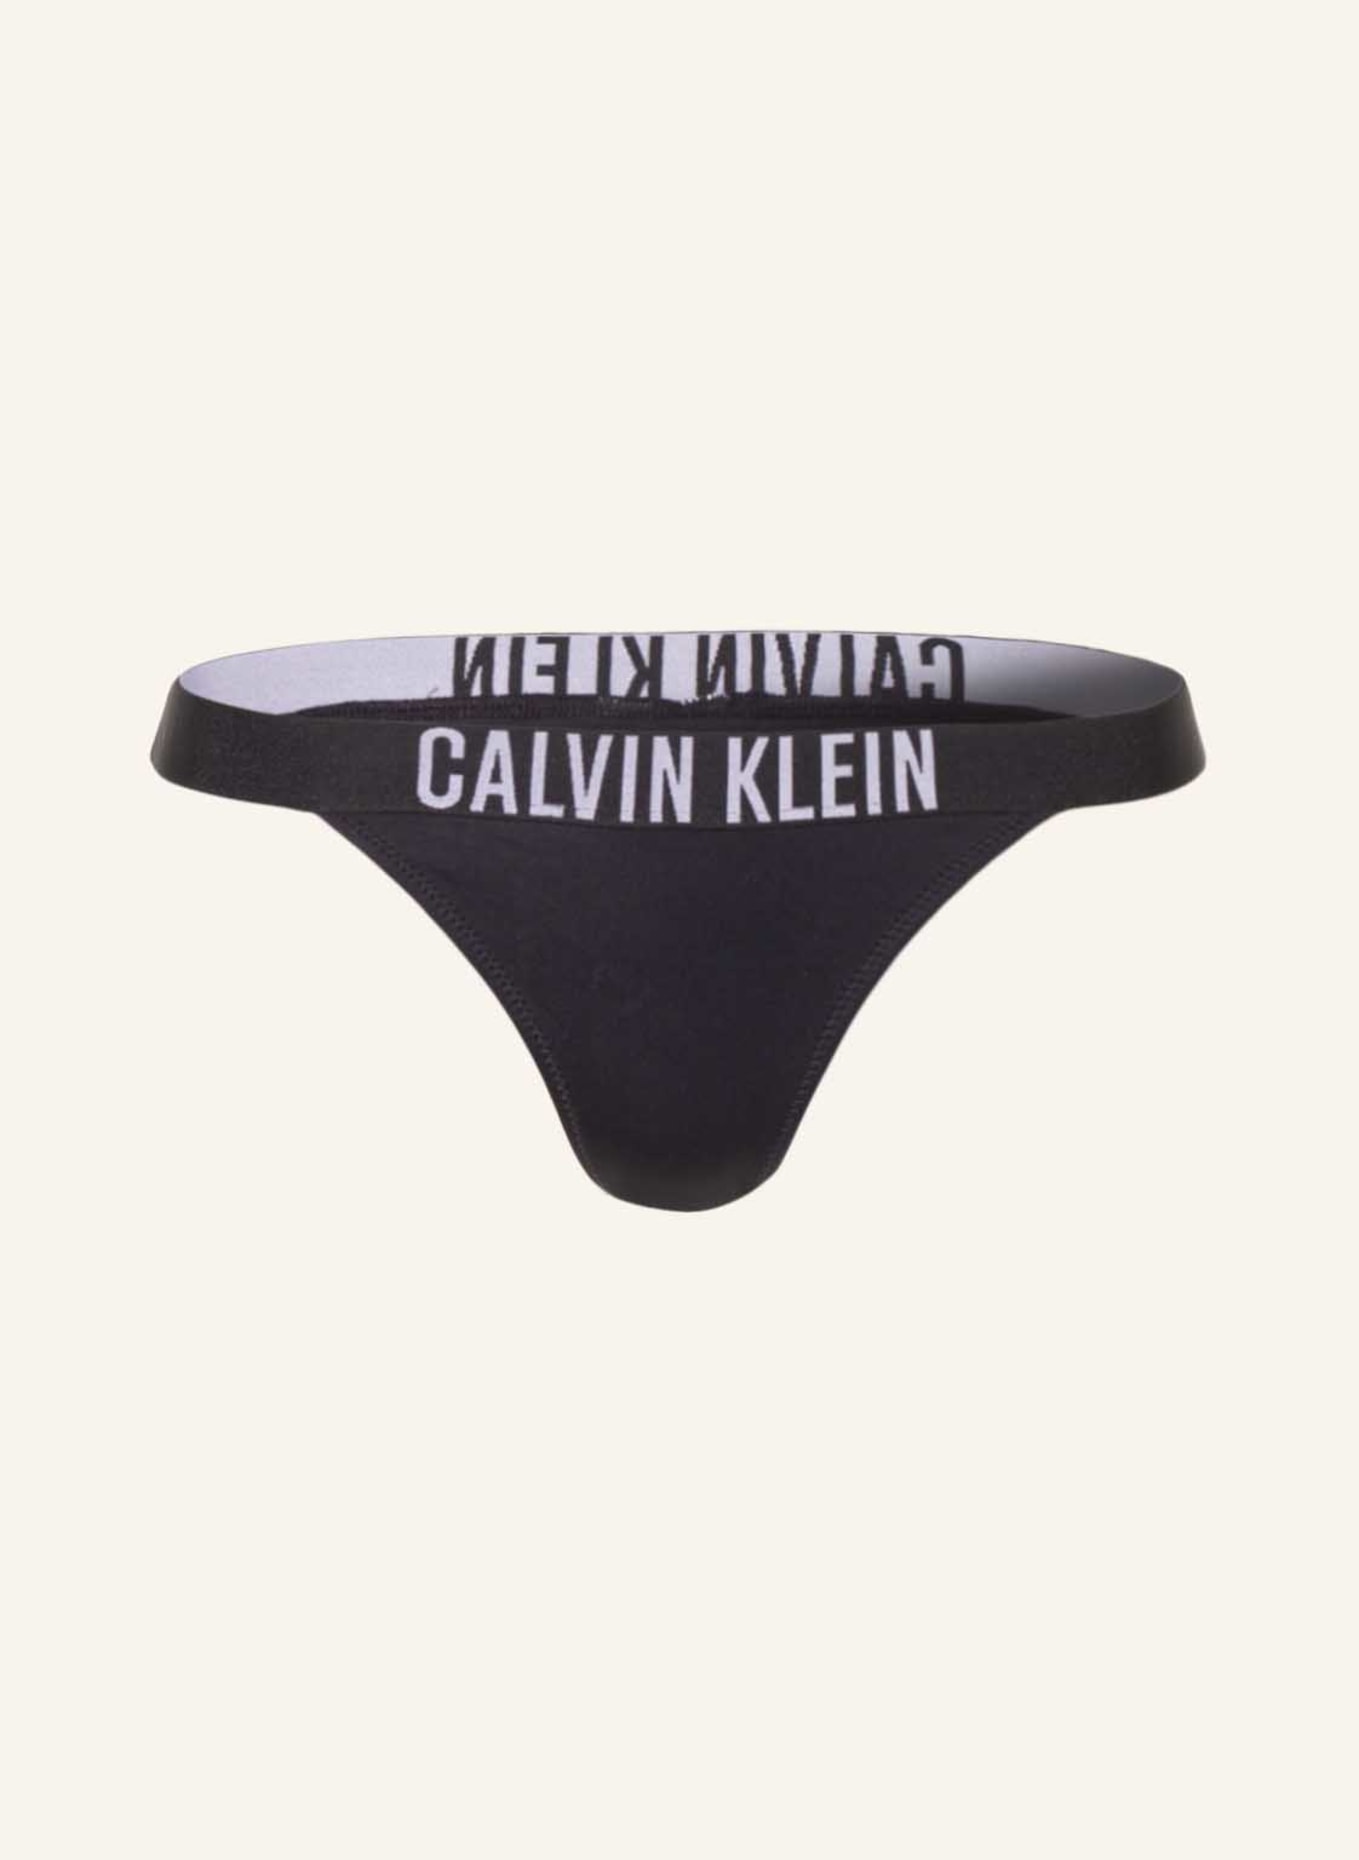 Calvin Klein Intense Power logo high leg brazilian bikini bottoms